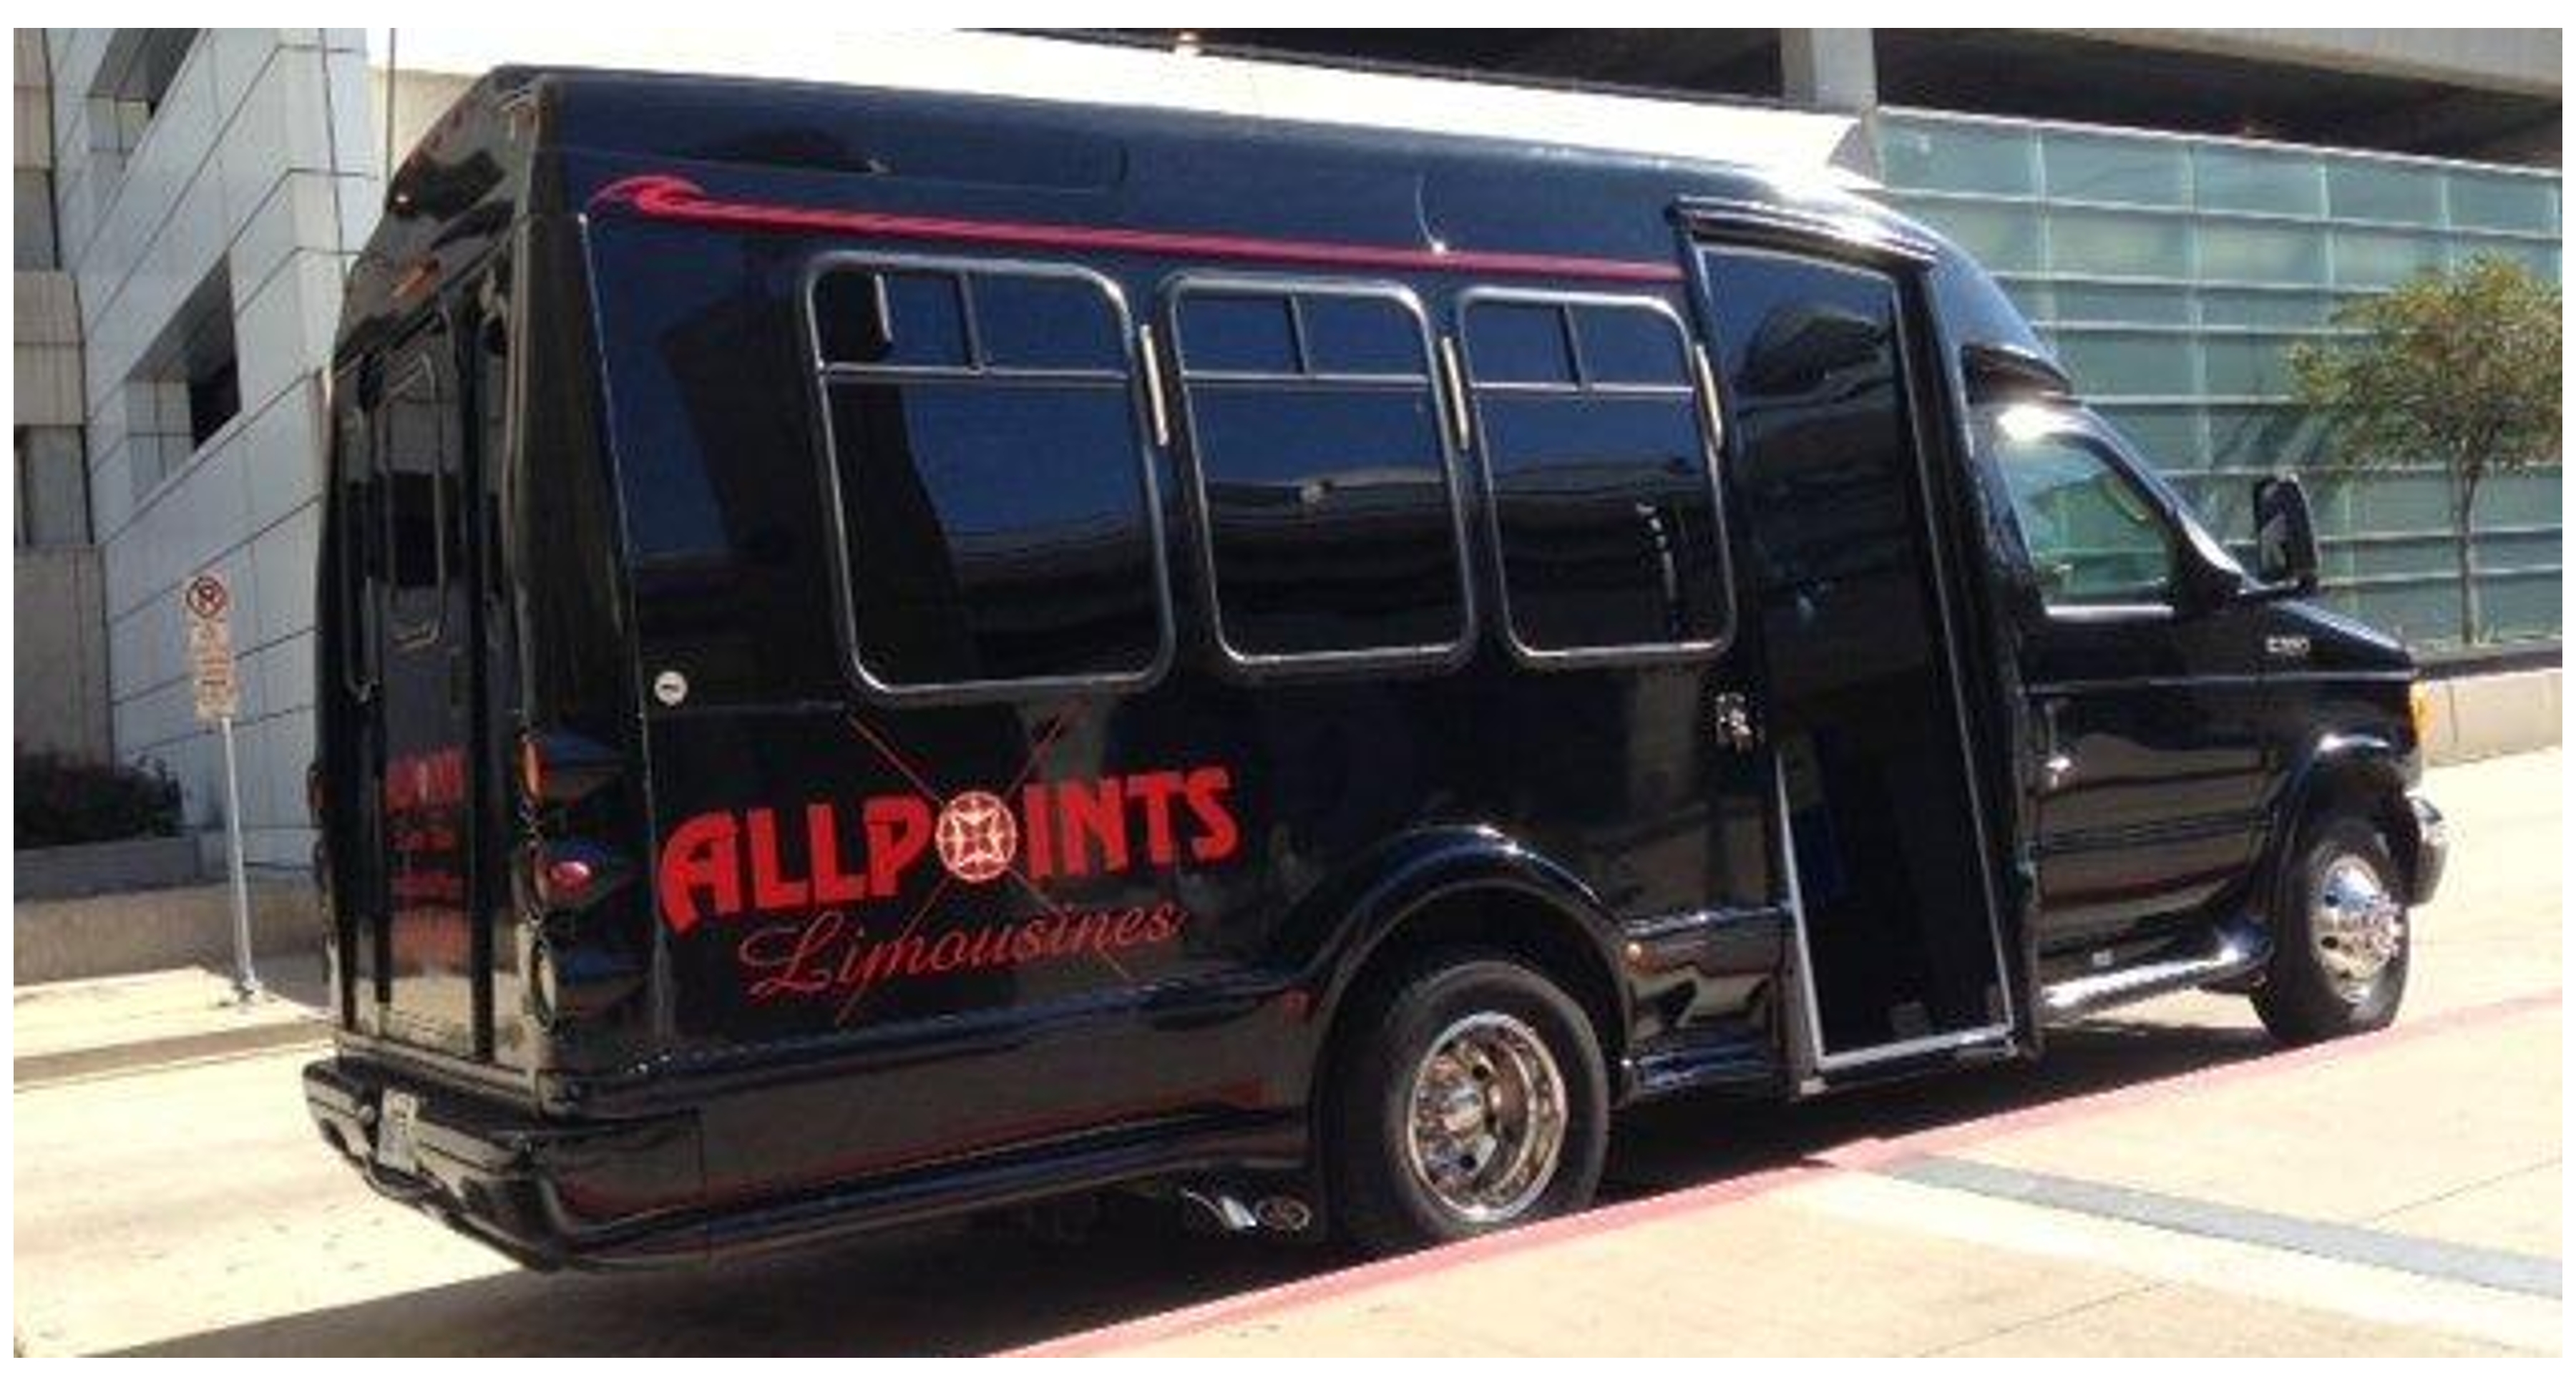 Our Executive Van/Limo Bus